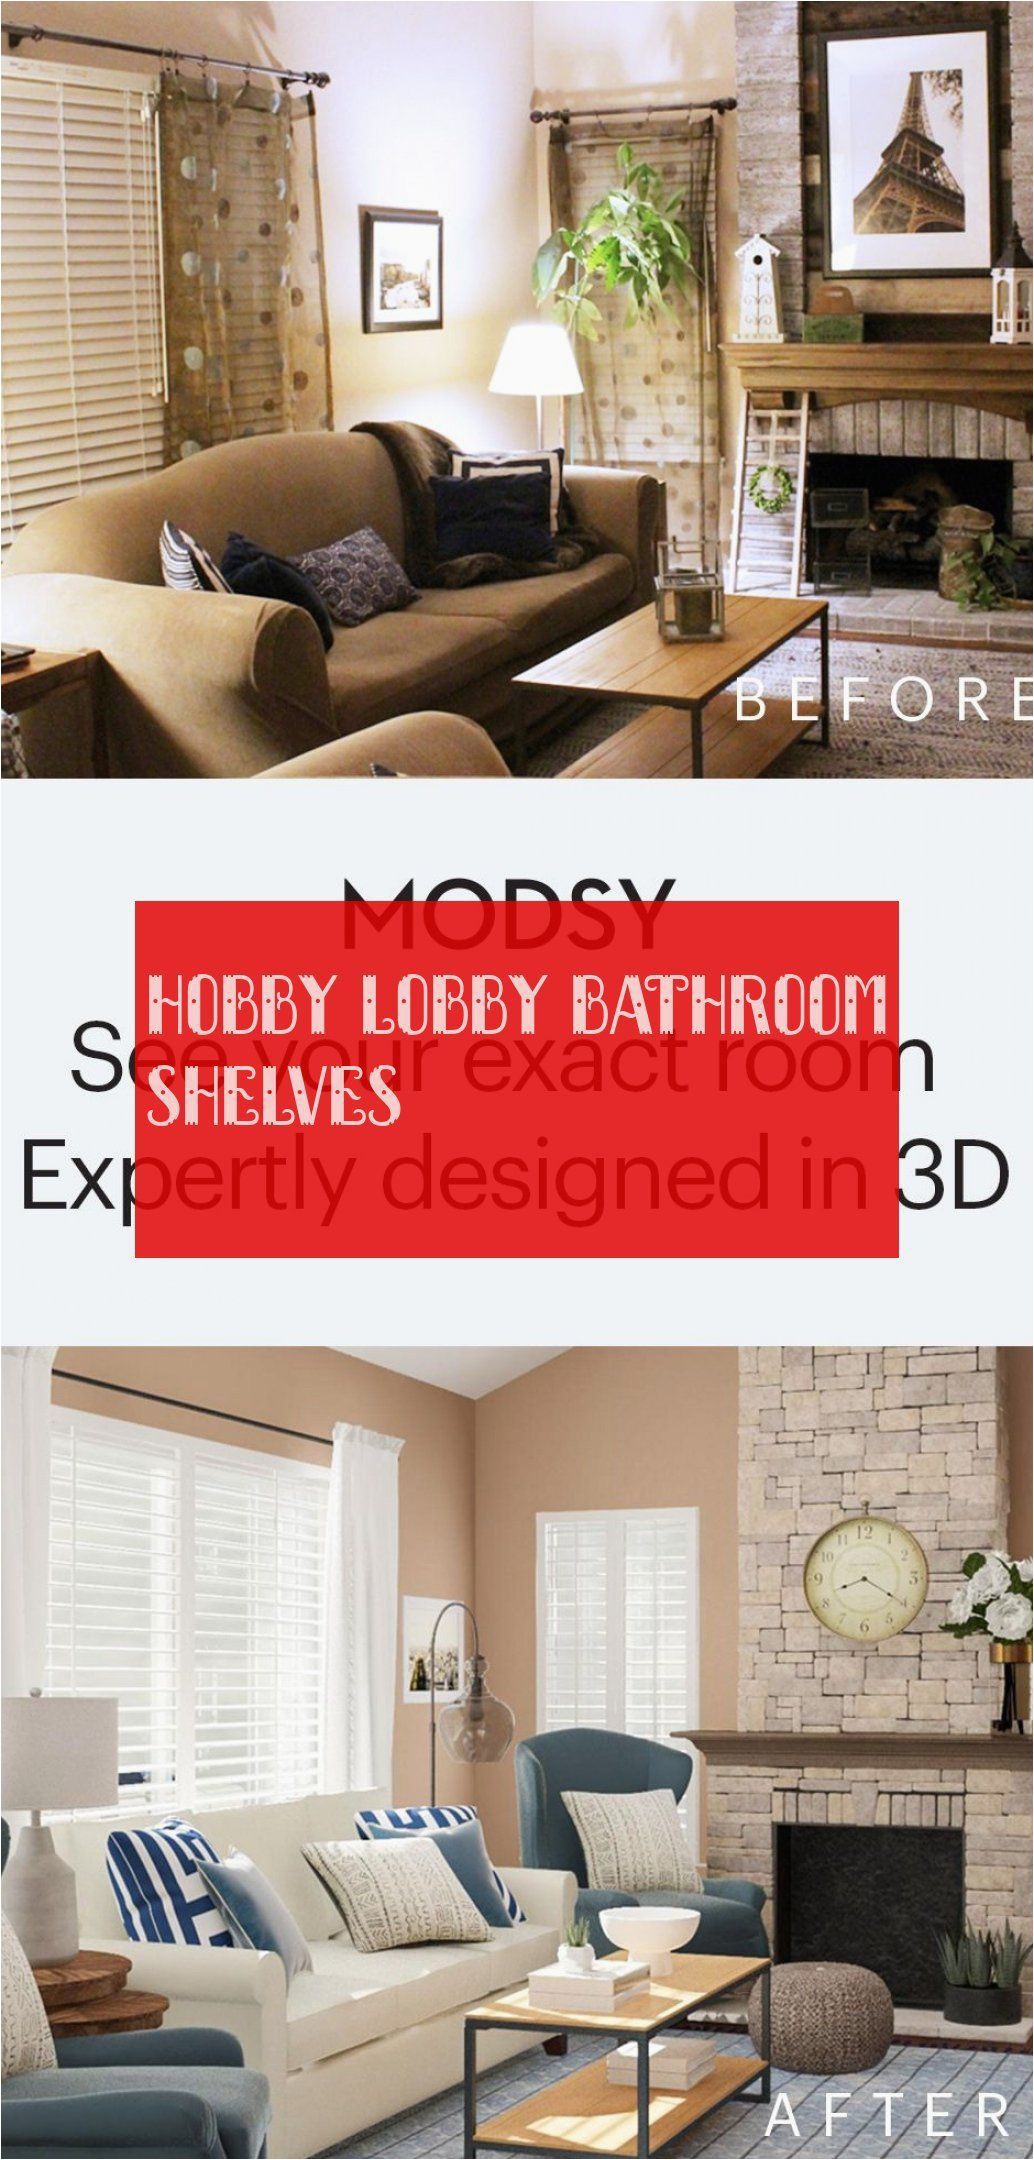 Area Rugs at Hobby Lobby Terrific Pics Bathroom Shelf Hobby Lobby Tips the Lookout